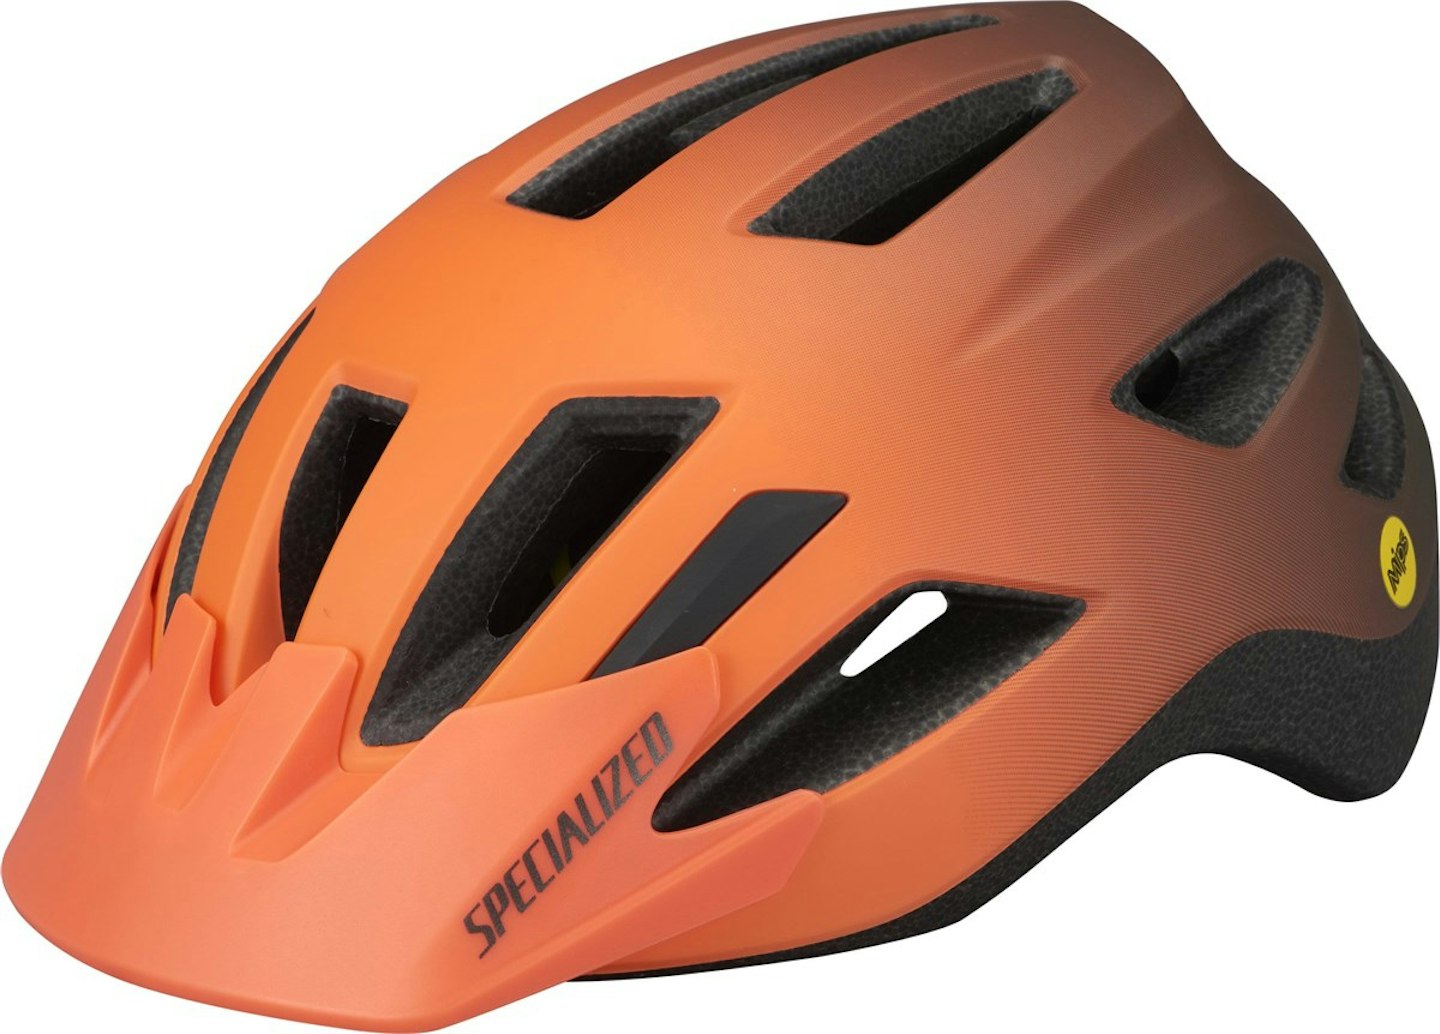 Specialized Shuffle LED Mips Kids Helmet orange and black